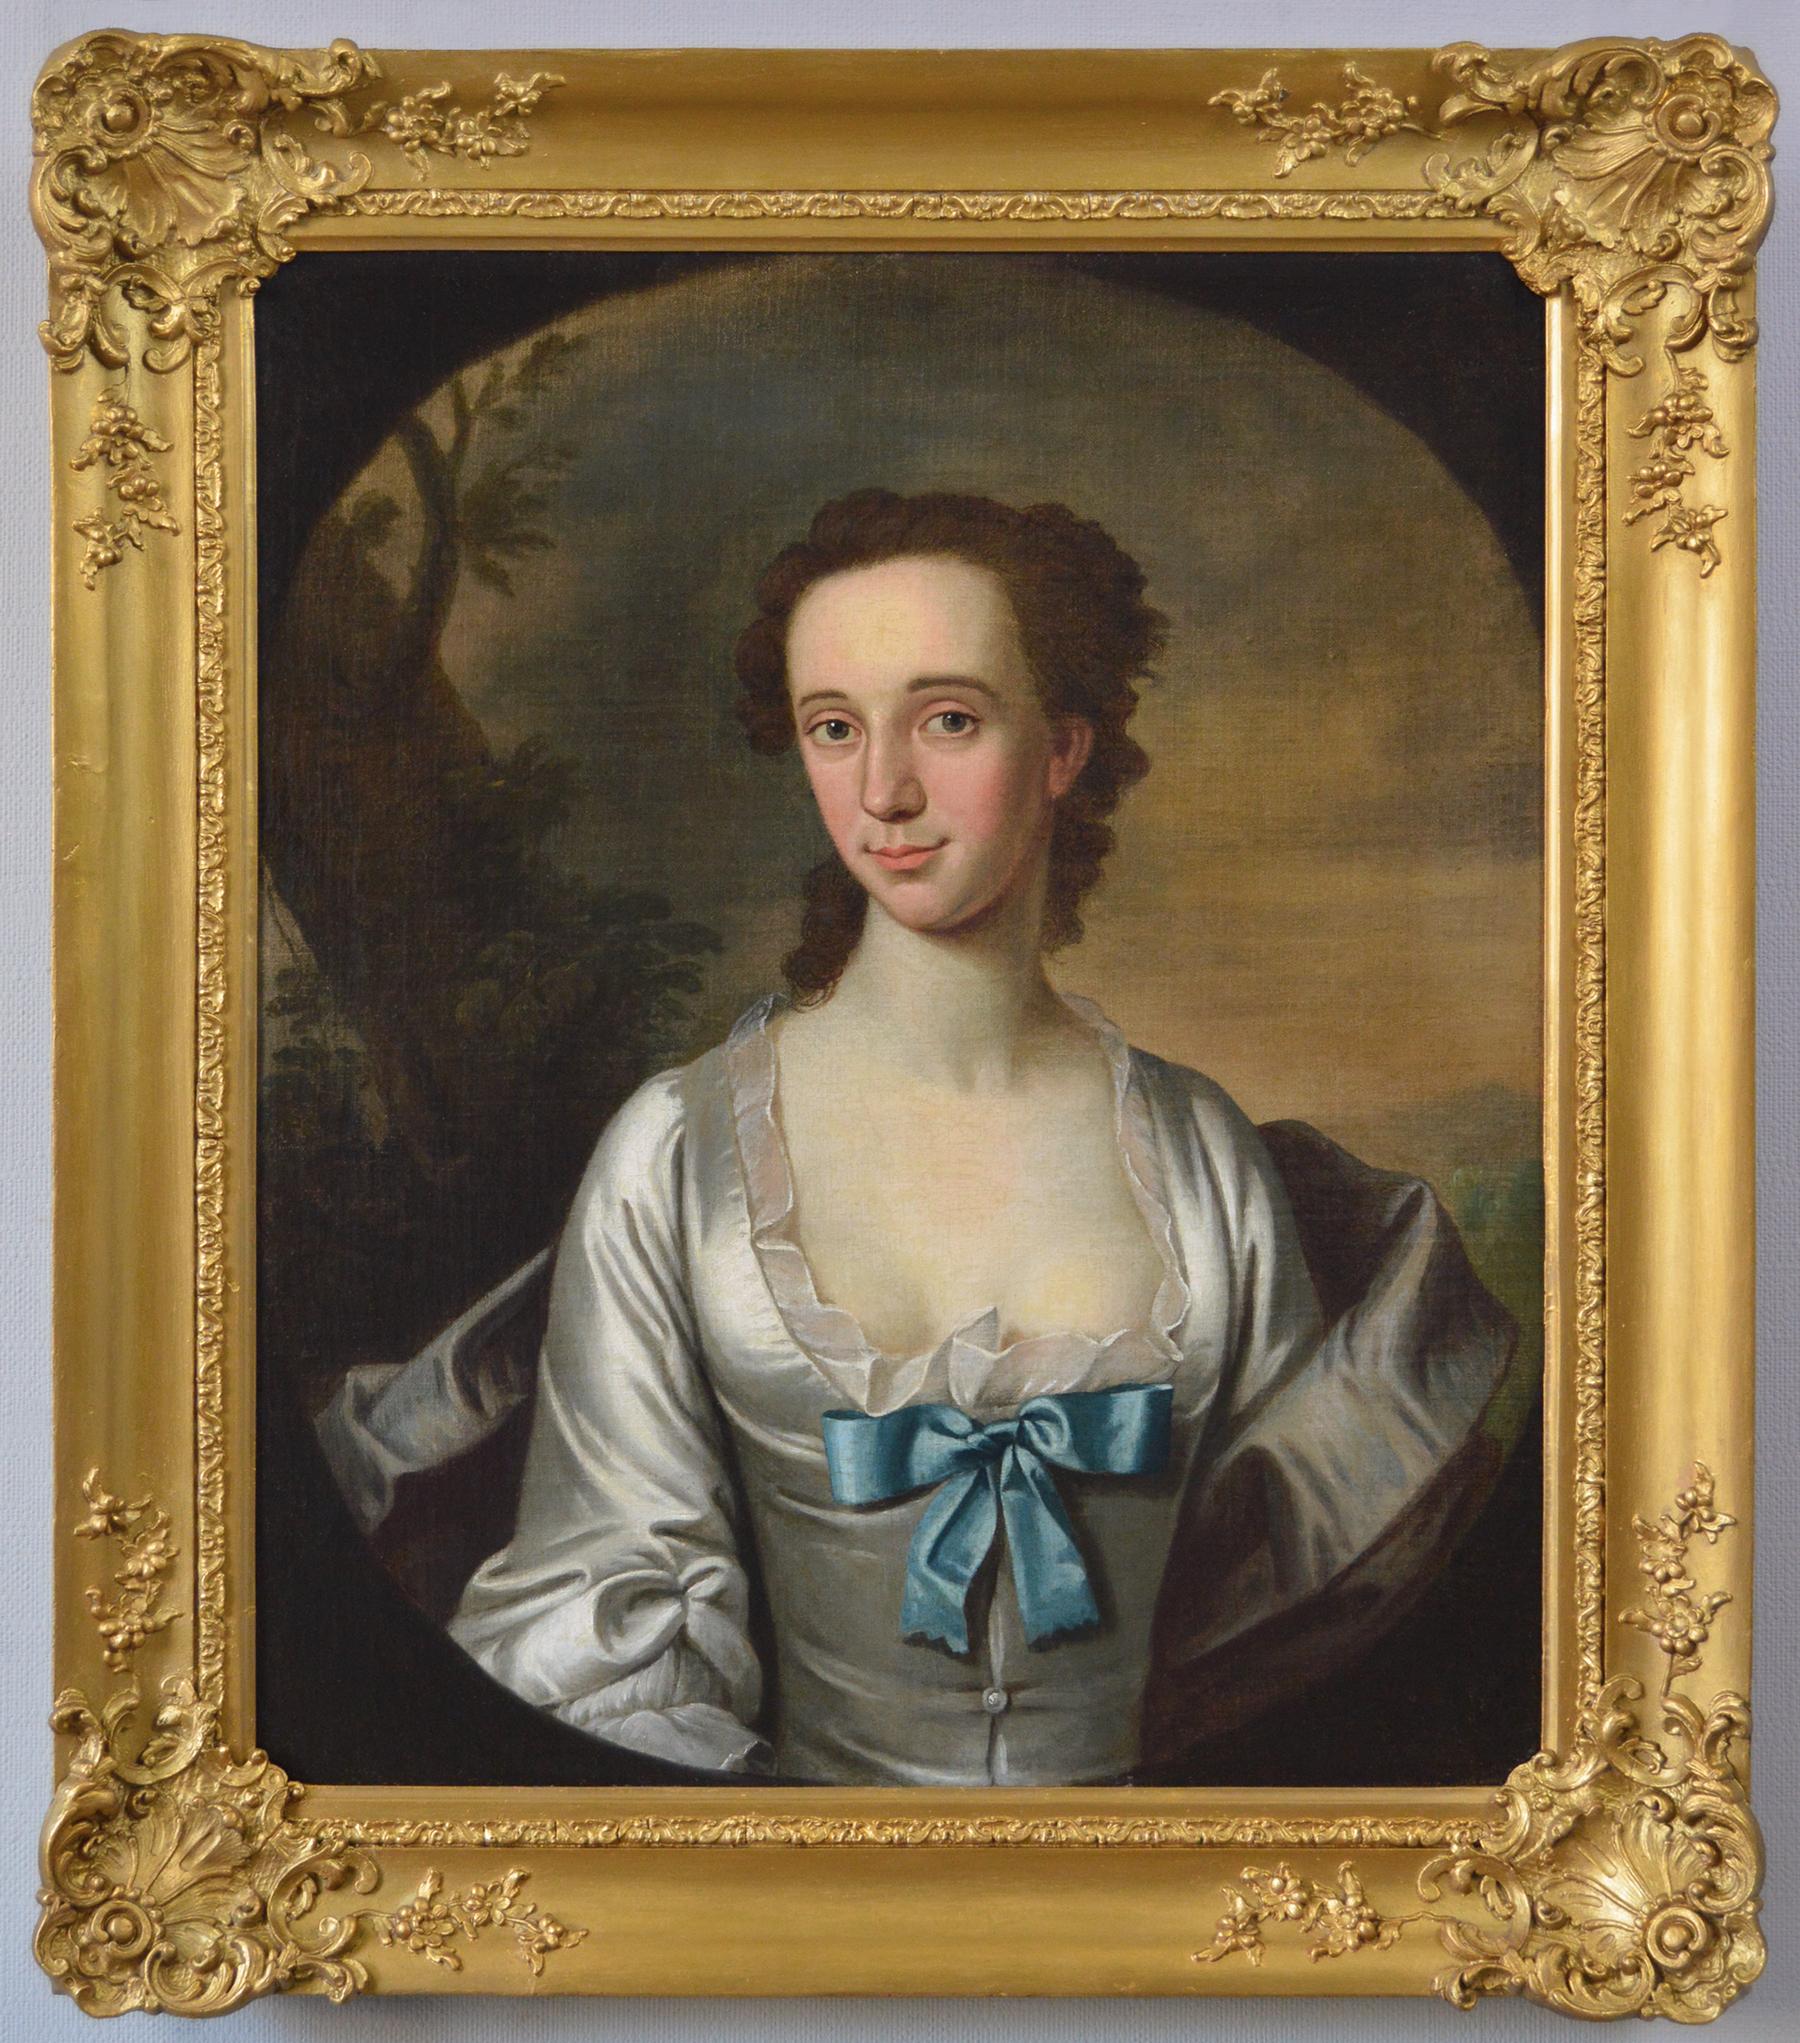 Joseph Highmore Portrait Painting - 18th Century portrait oil painting of a lady